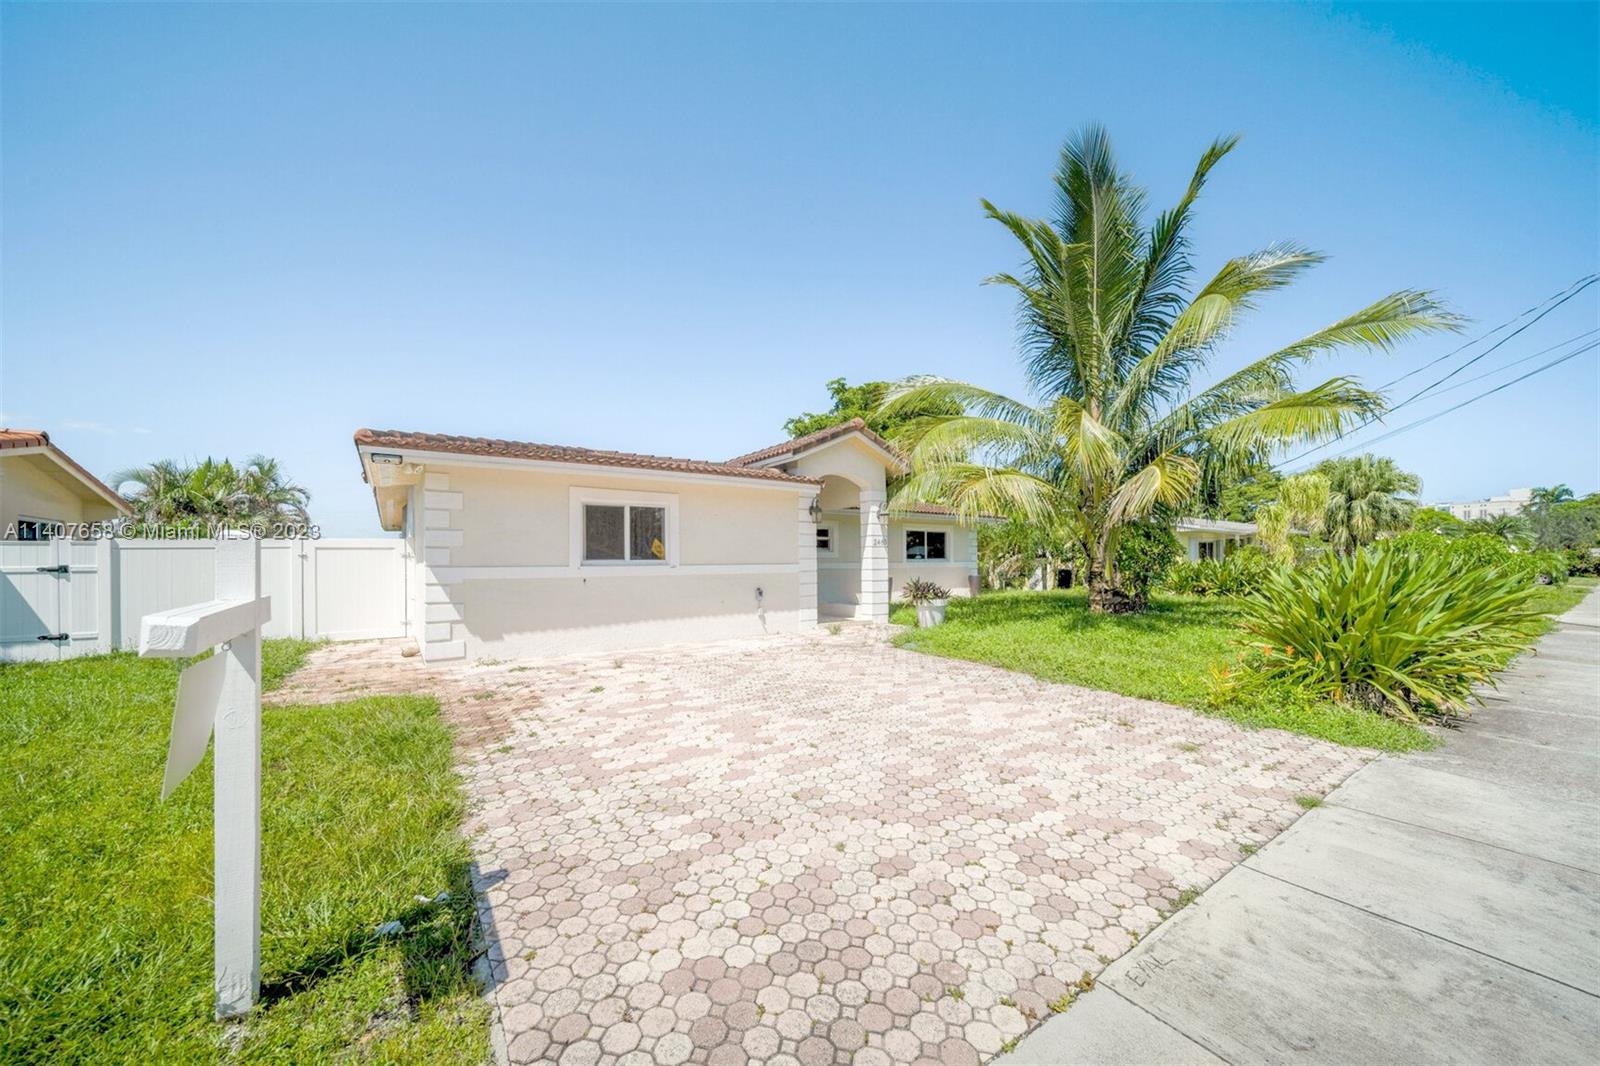 Property for Sale at 2465 Ne 209th Ter, Miami, Broward County, Florida - Bedrooms: 4 
Bathrooms: 3  - $1,390,000